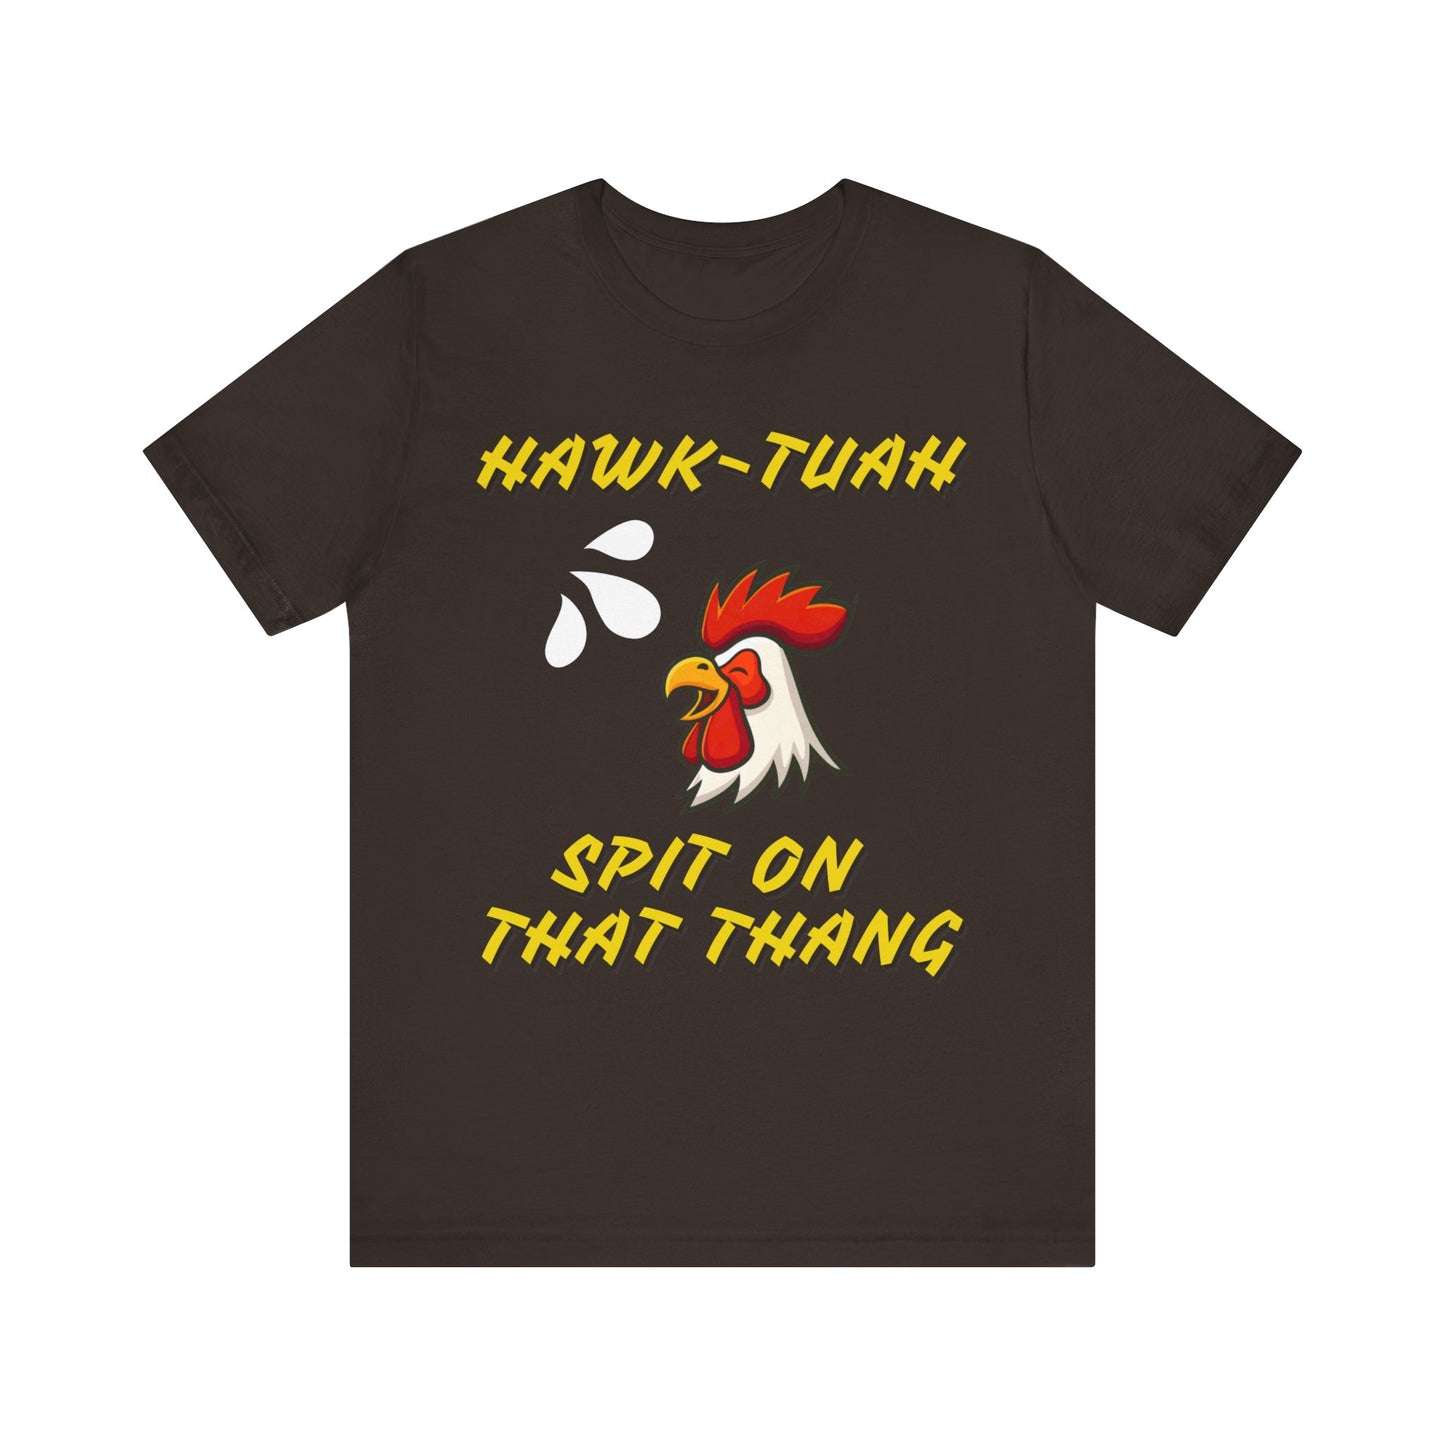 Super Dope Threads - “Hawk-Tuah”